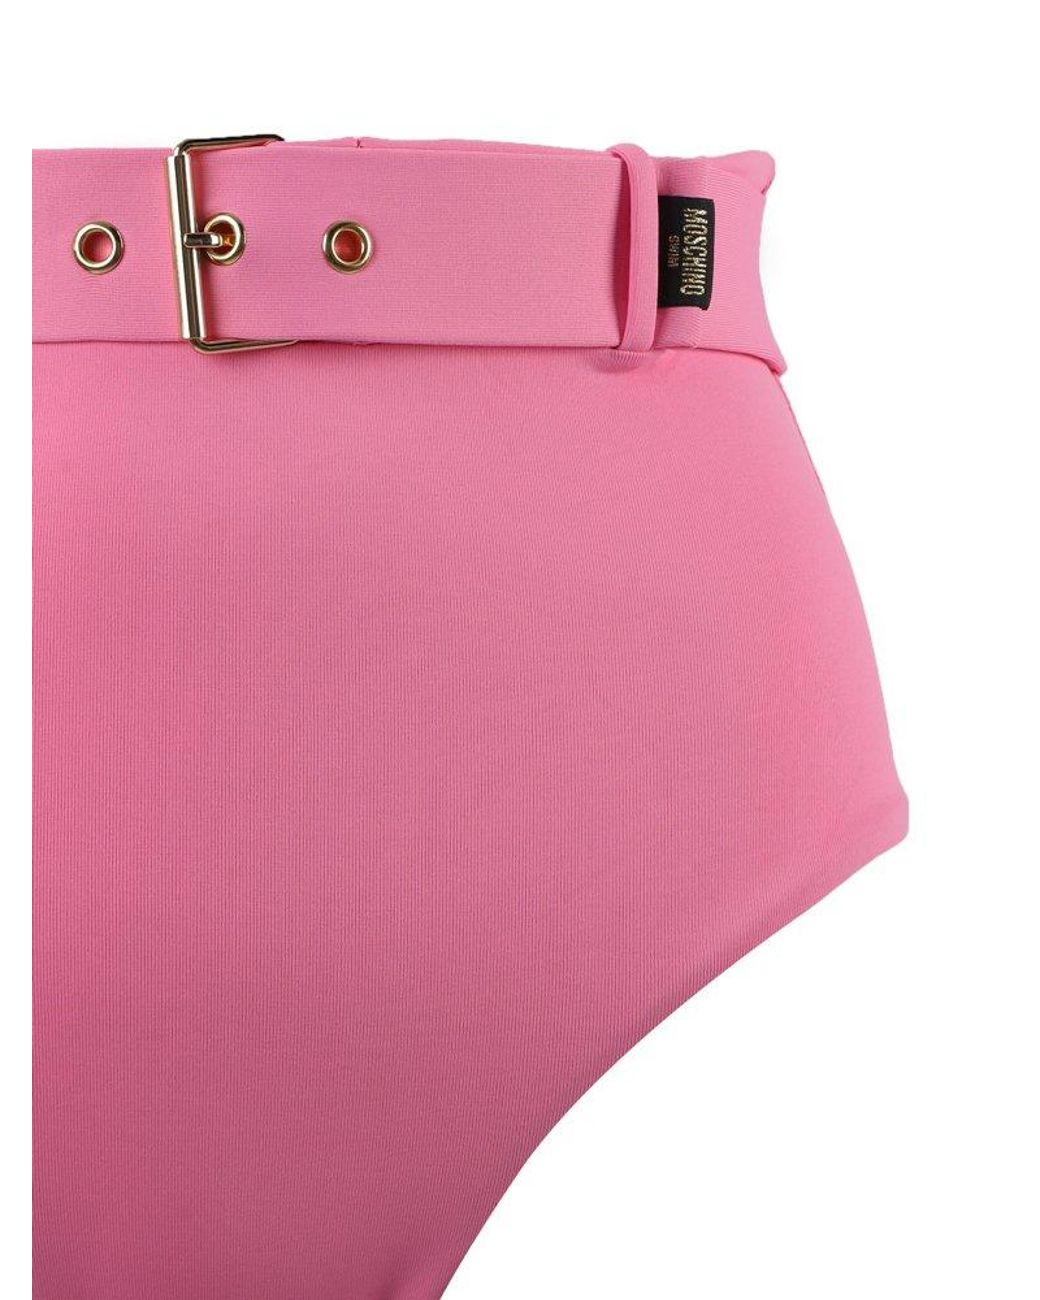 Womens Beachwear and swimwear outfits Moschino Beachwear and swimwear outfits Moschino Synthetic Bond Girl Swimsuit in Pink 